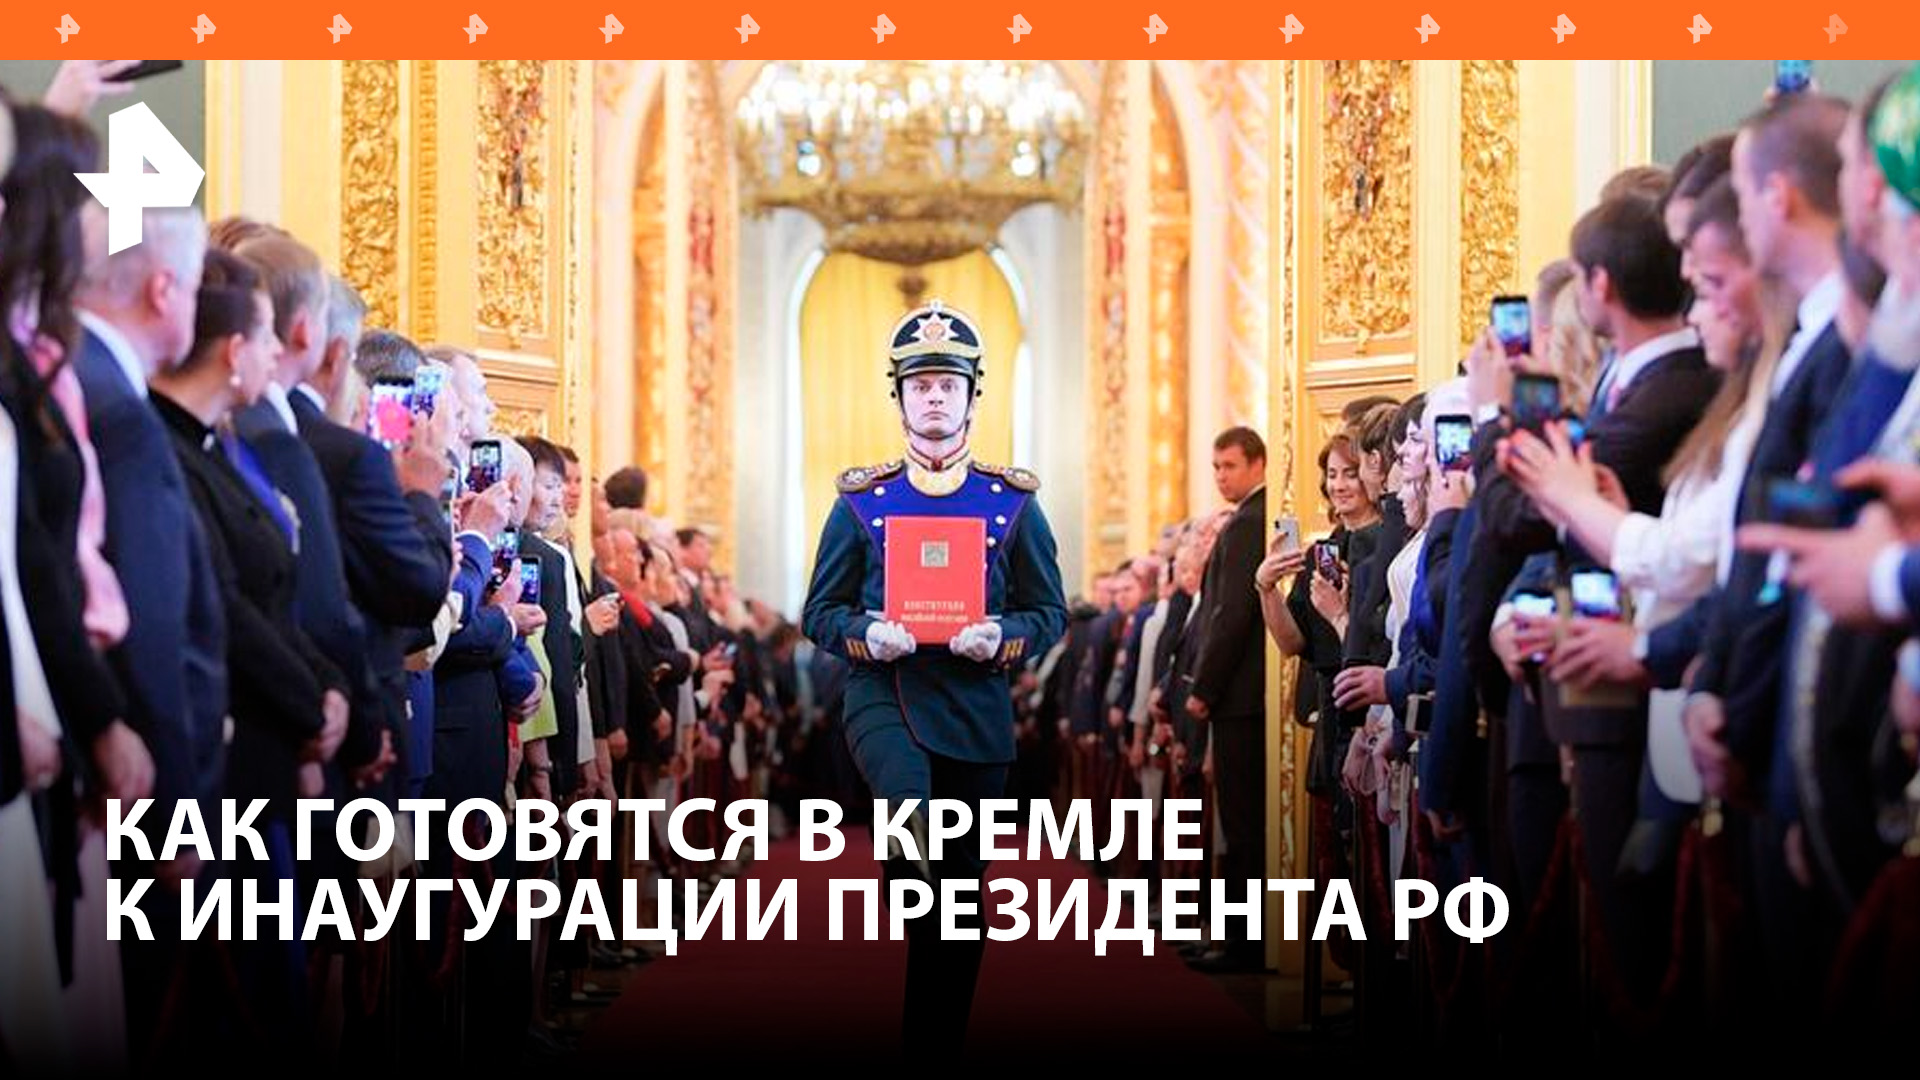 Последние приготовления к инаугурации президента РФ / РЕН Новости